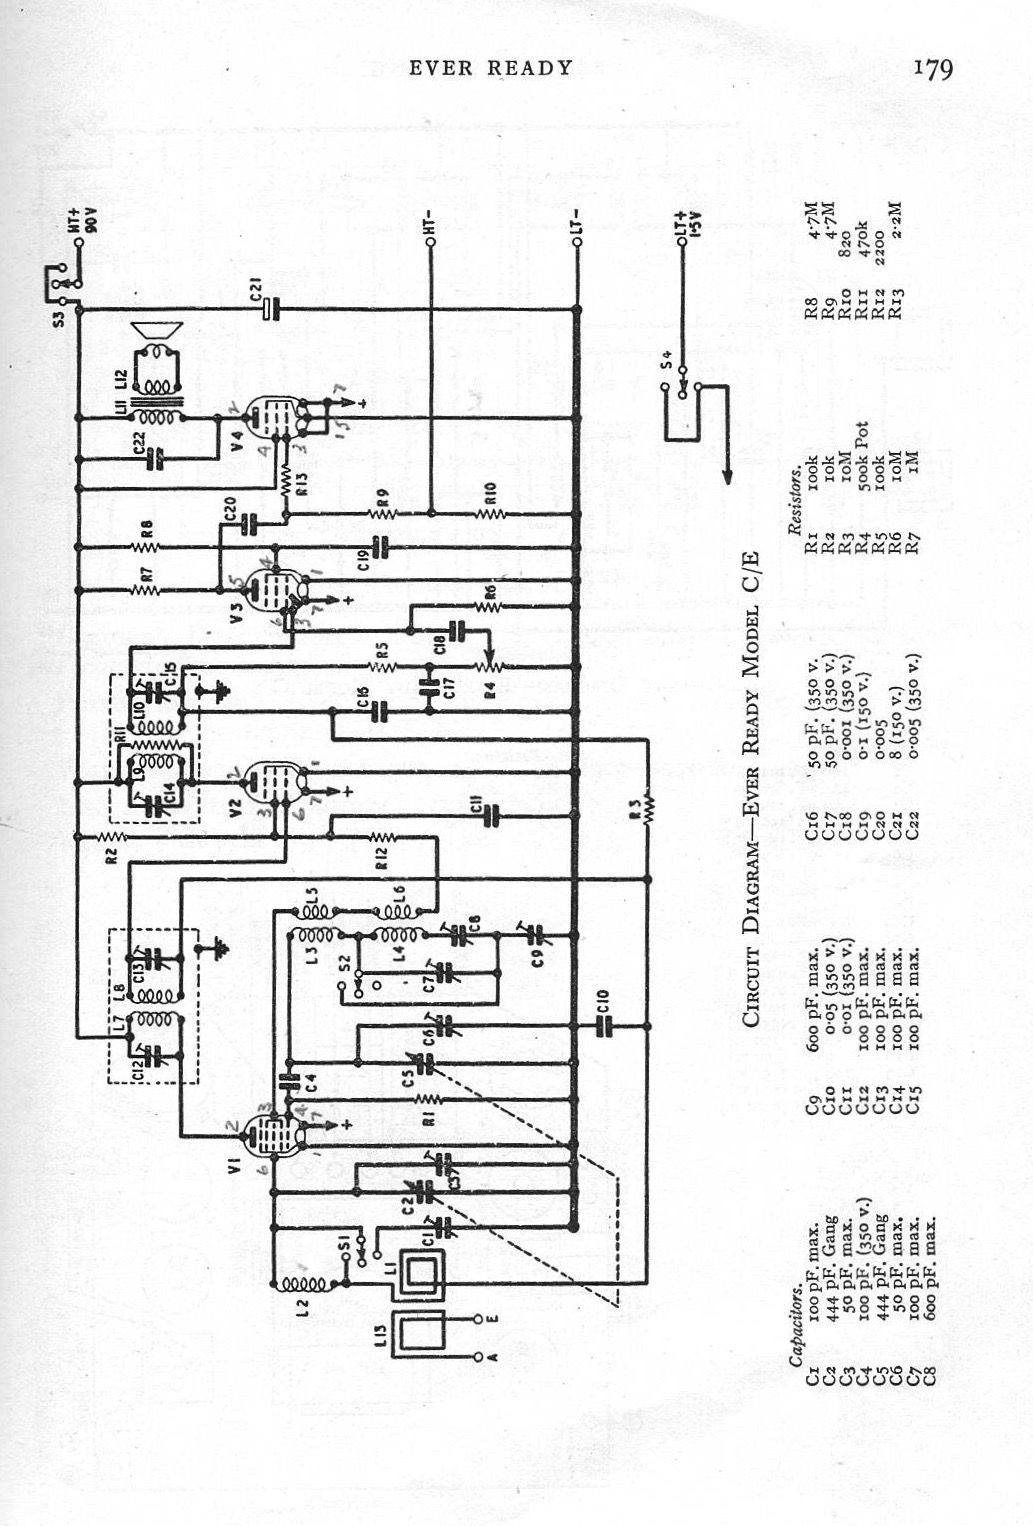 The circuit diagram of the Ever Ready Type C vintage valve radio set